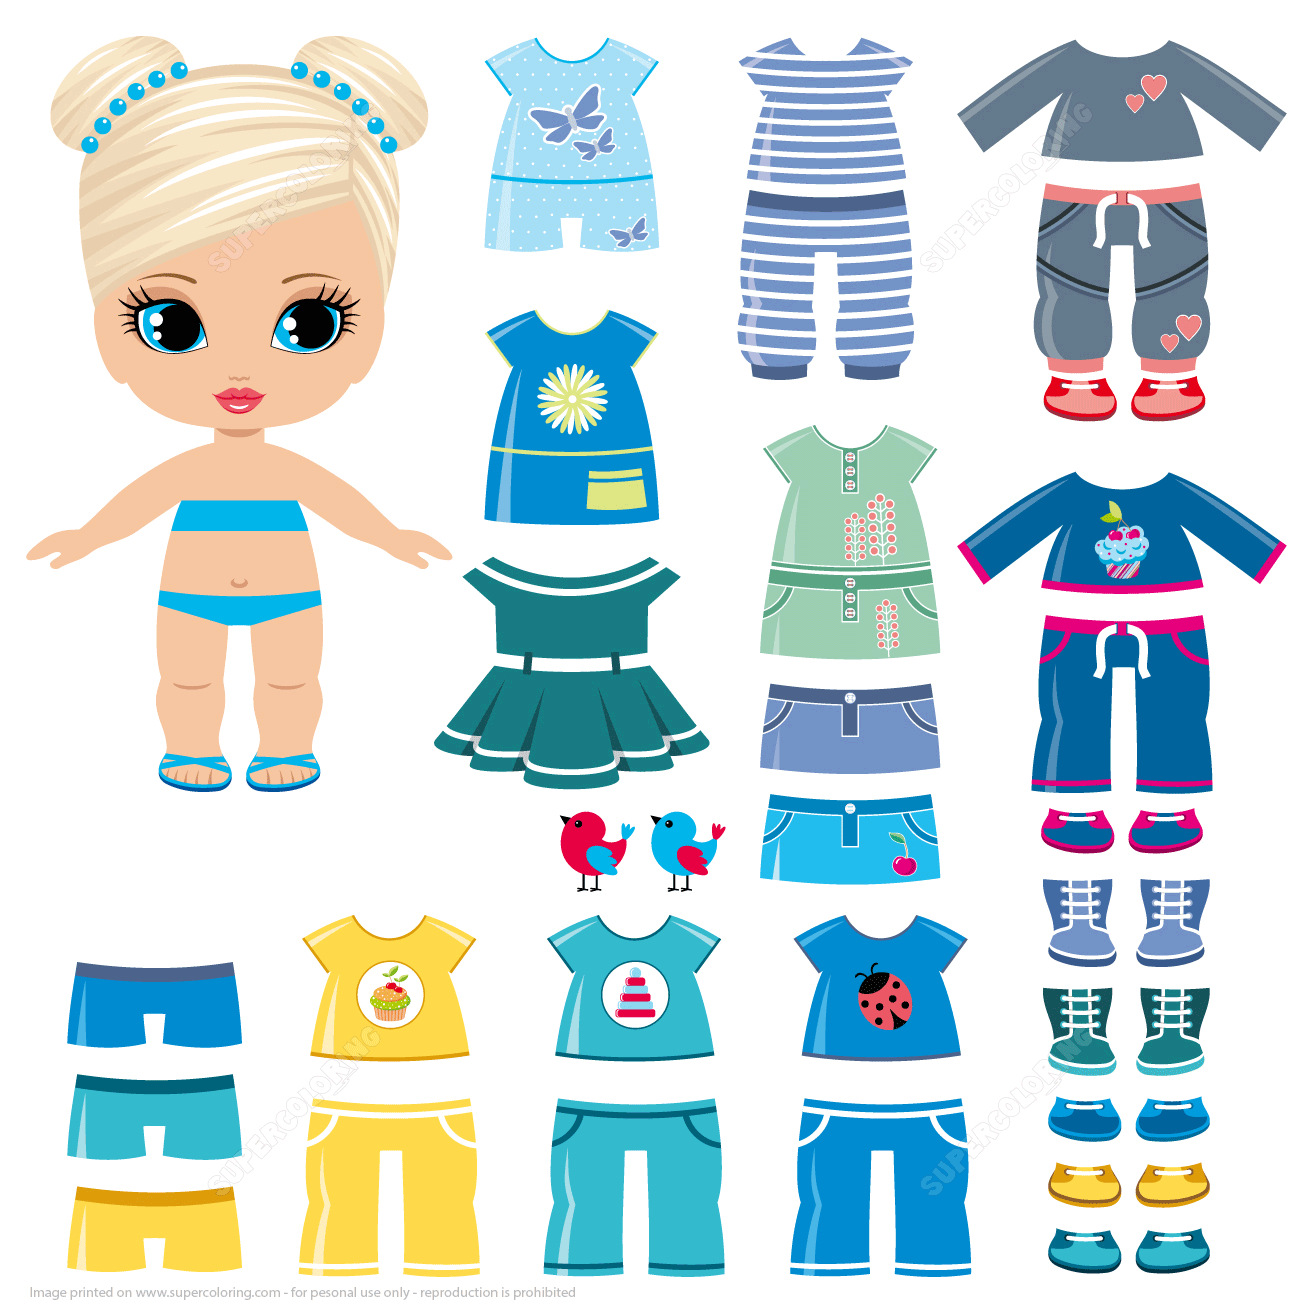 Dress Up Paper Dolls | Free Printable Papercraft Templates - Free Printable Dress Up Paper Dolls